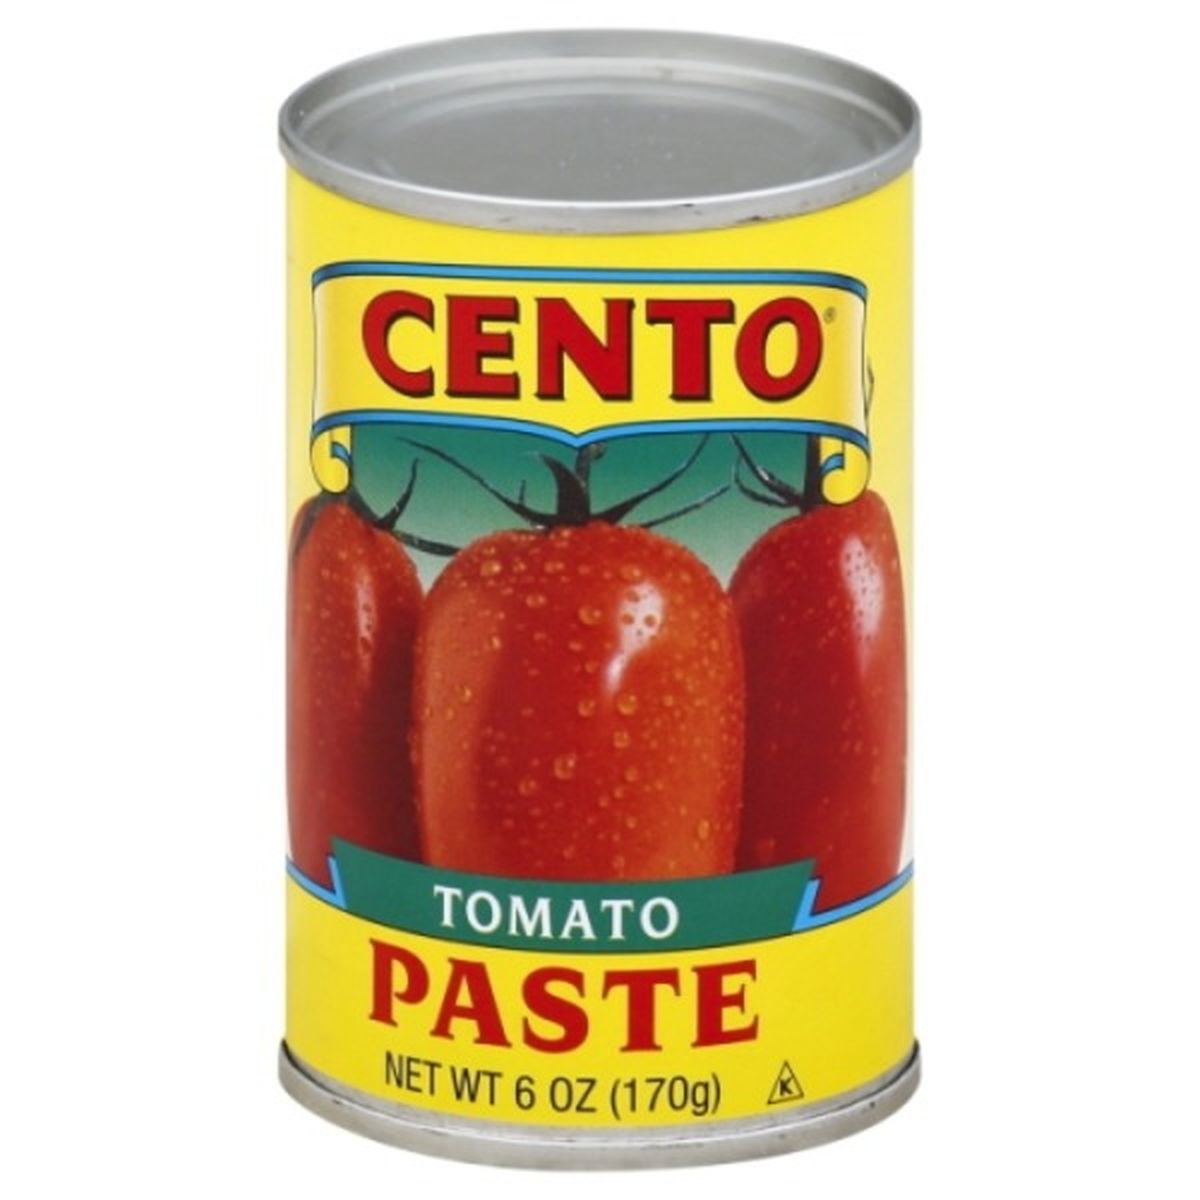 Calories in Cento Tomato Paste